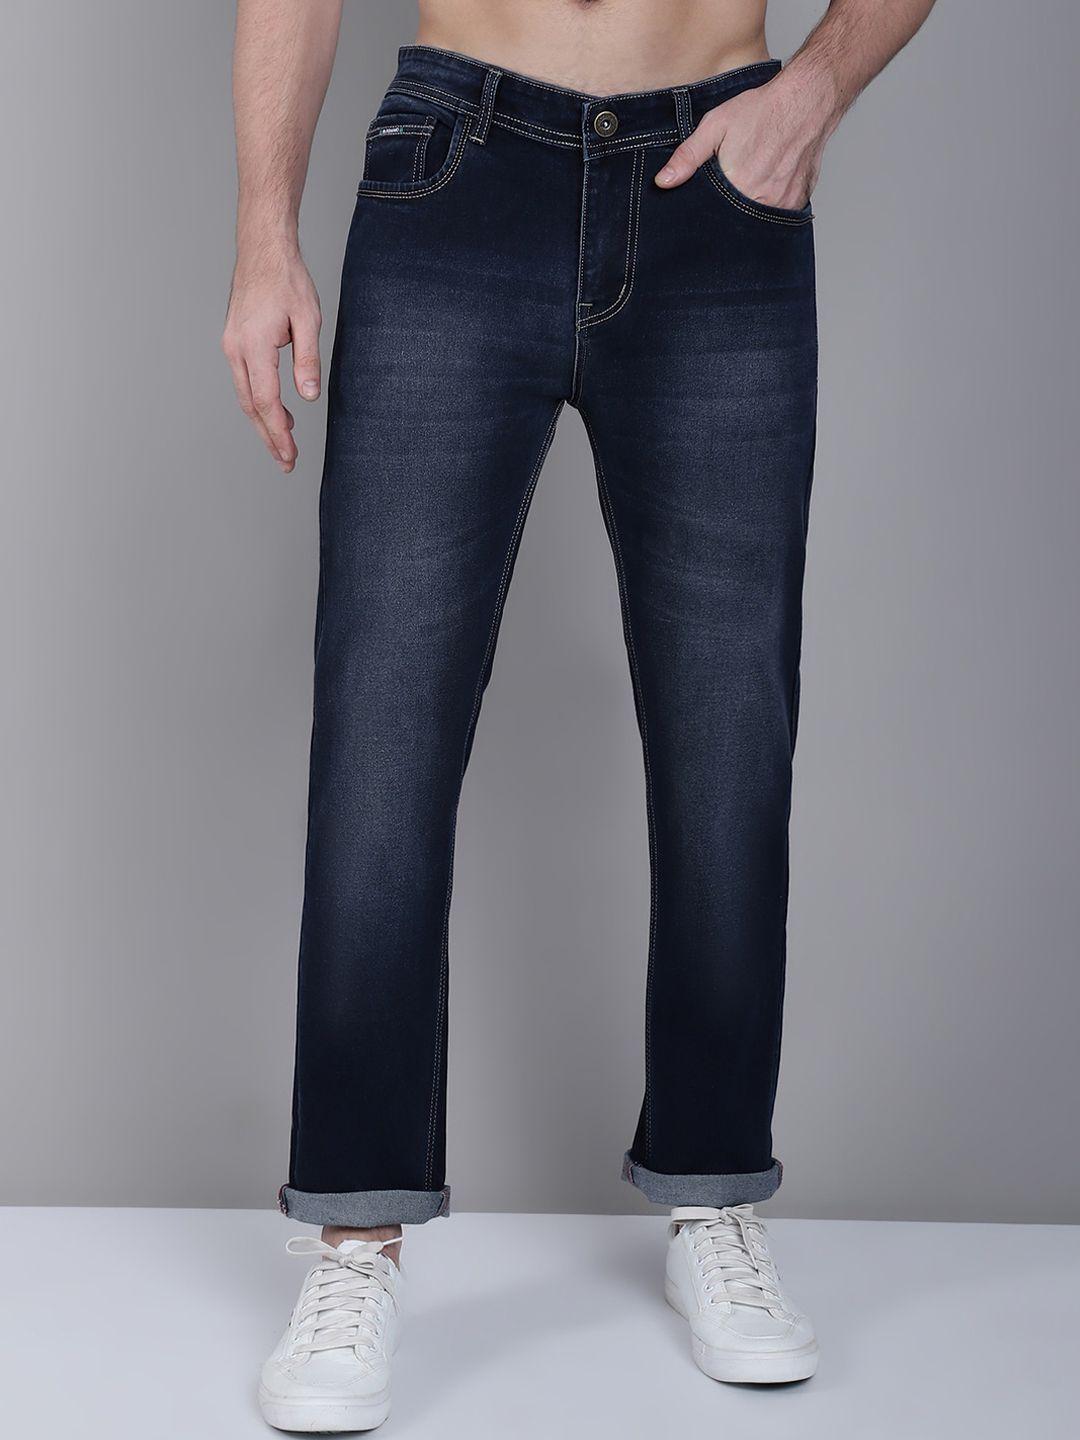 rodamo-men-blue-light-fade-stretchable-jeans